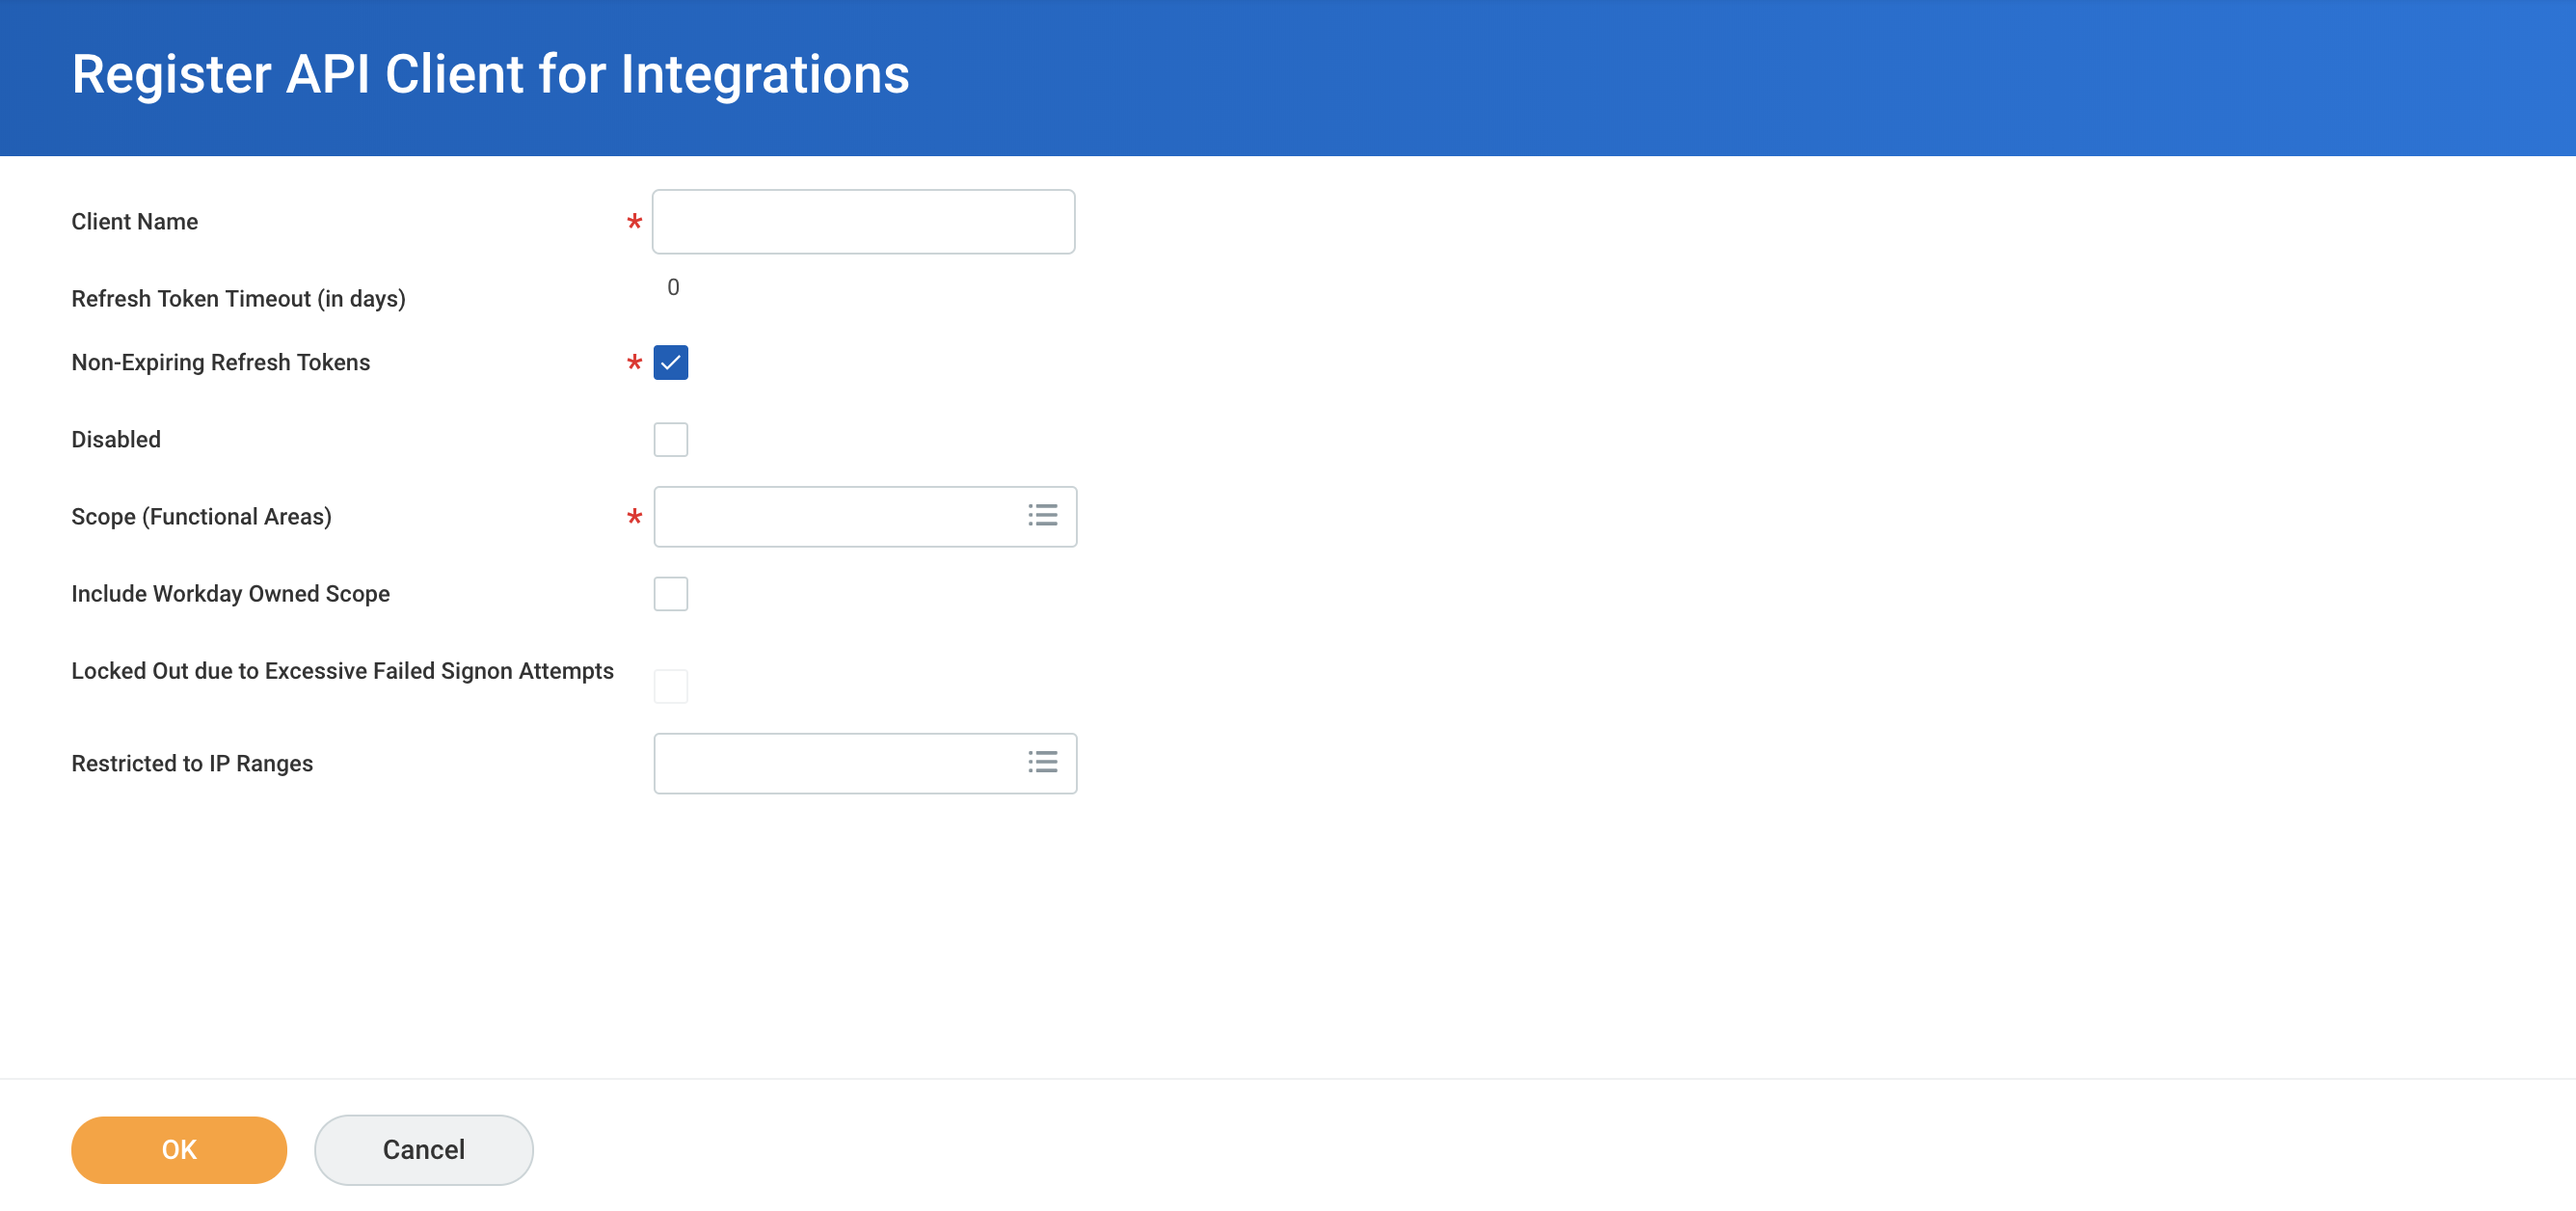 Register API Client for Integrations